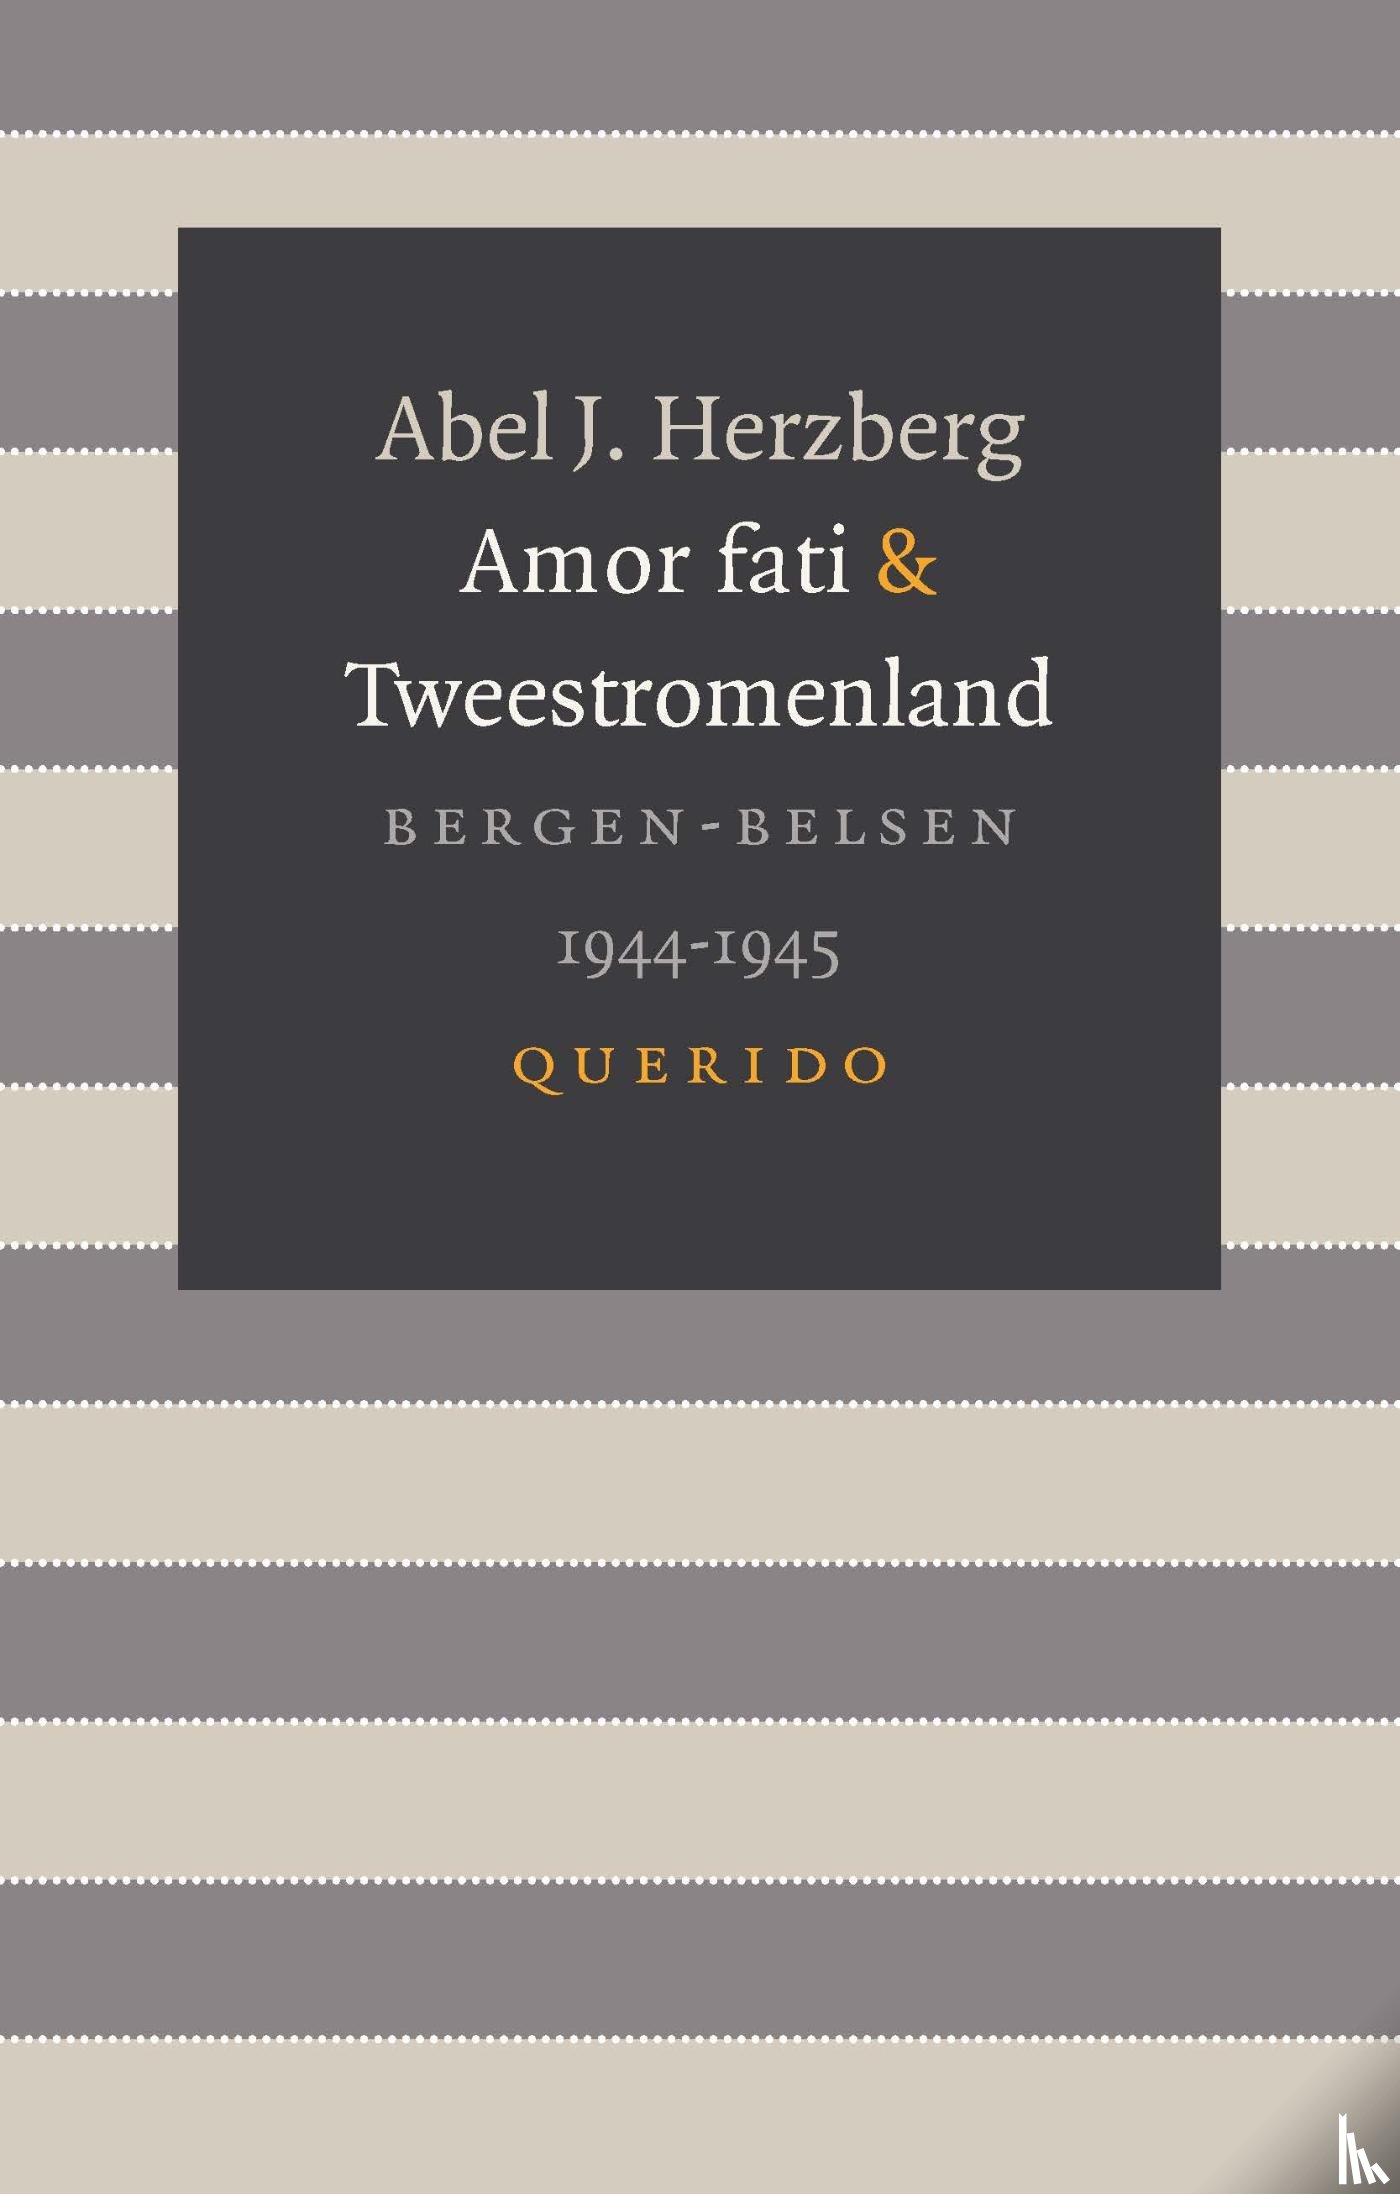 Herzberg, Abel J. - Amor fati & Tweestromenland